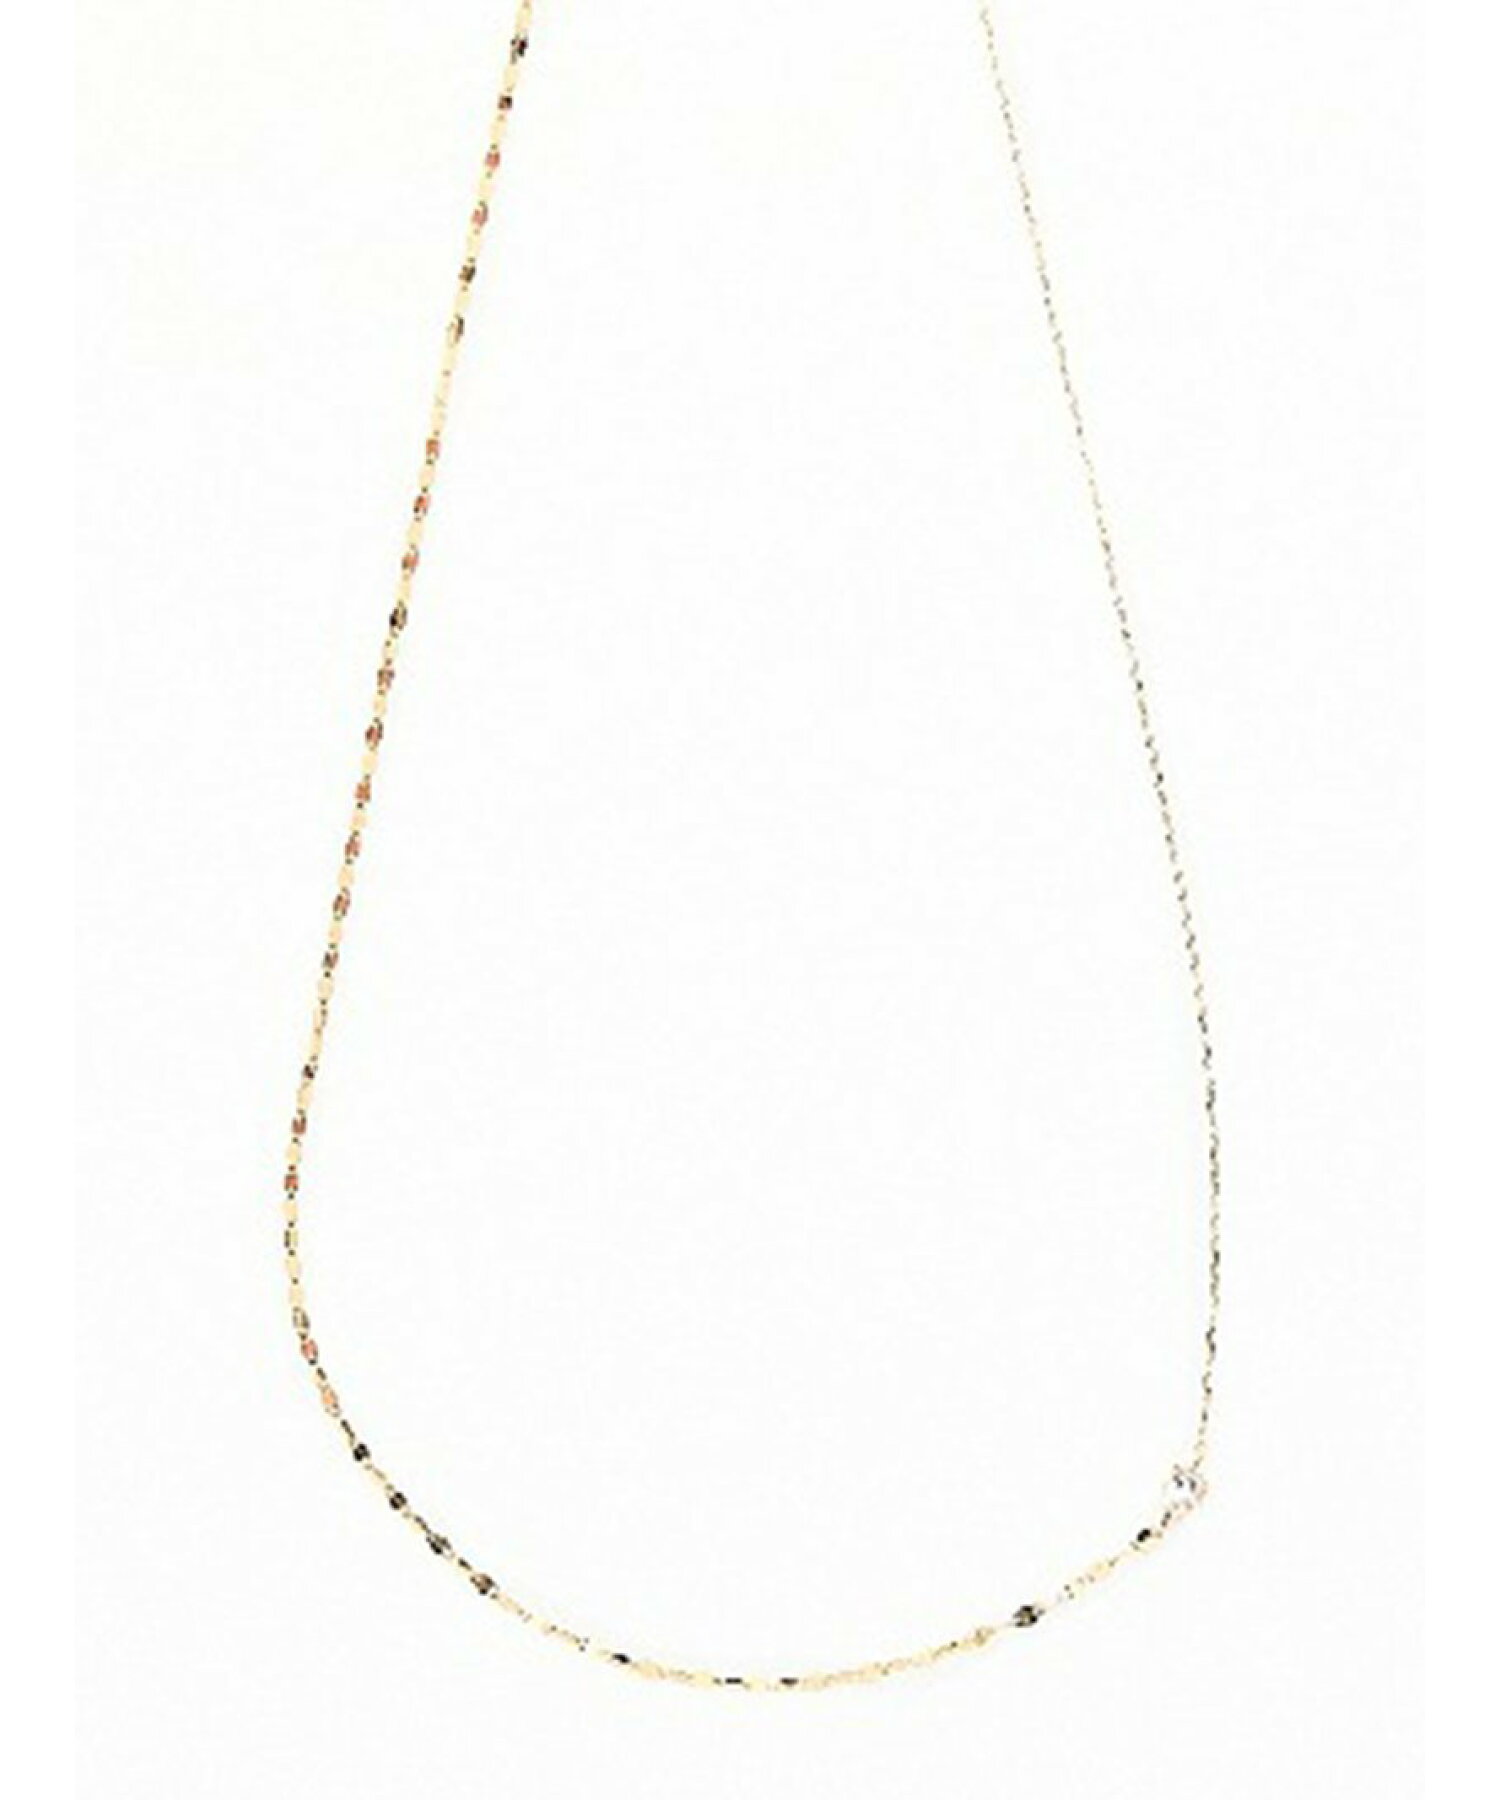 les bon bon/float side necklace フロート サイド ネックレス イエローゴールド K10 10K ジュエリー ギフト MADE IN JAPAN 日本製 ルボンボン BOB162